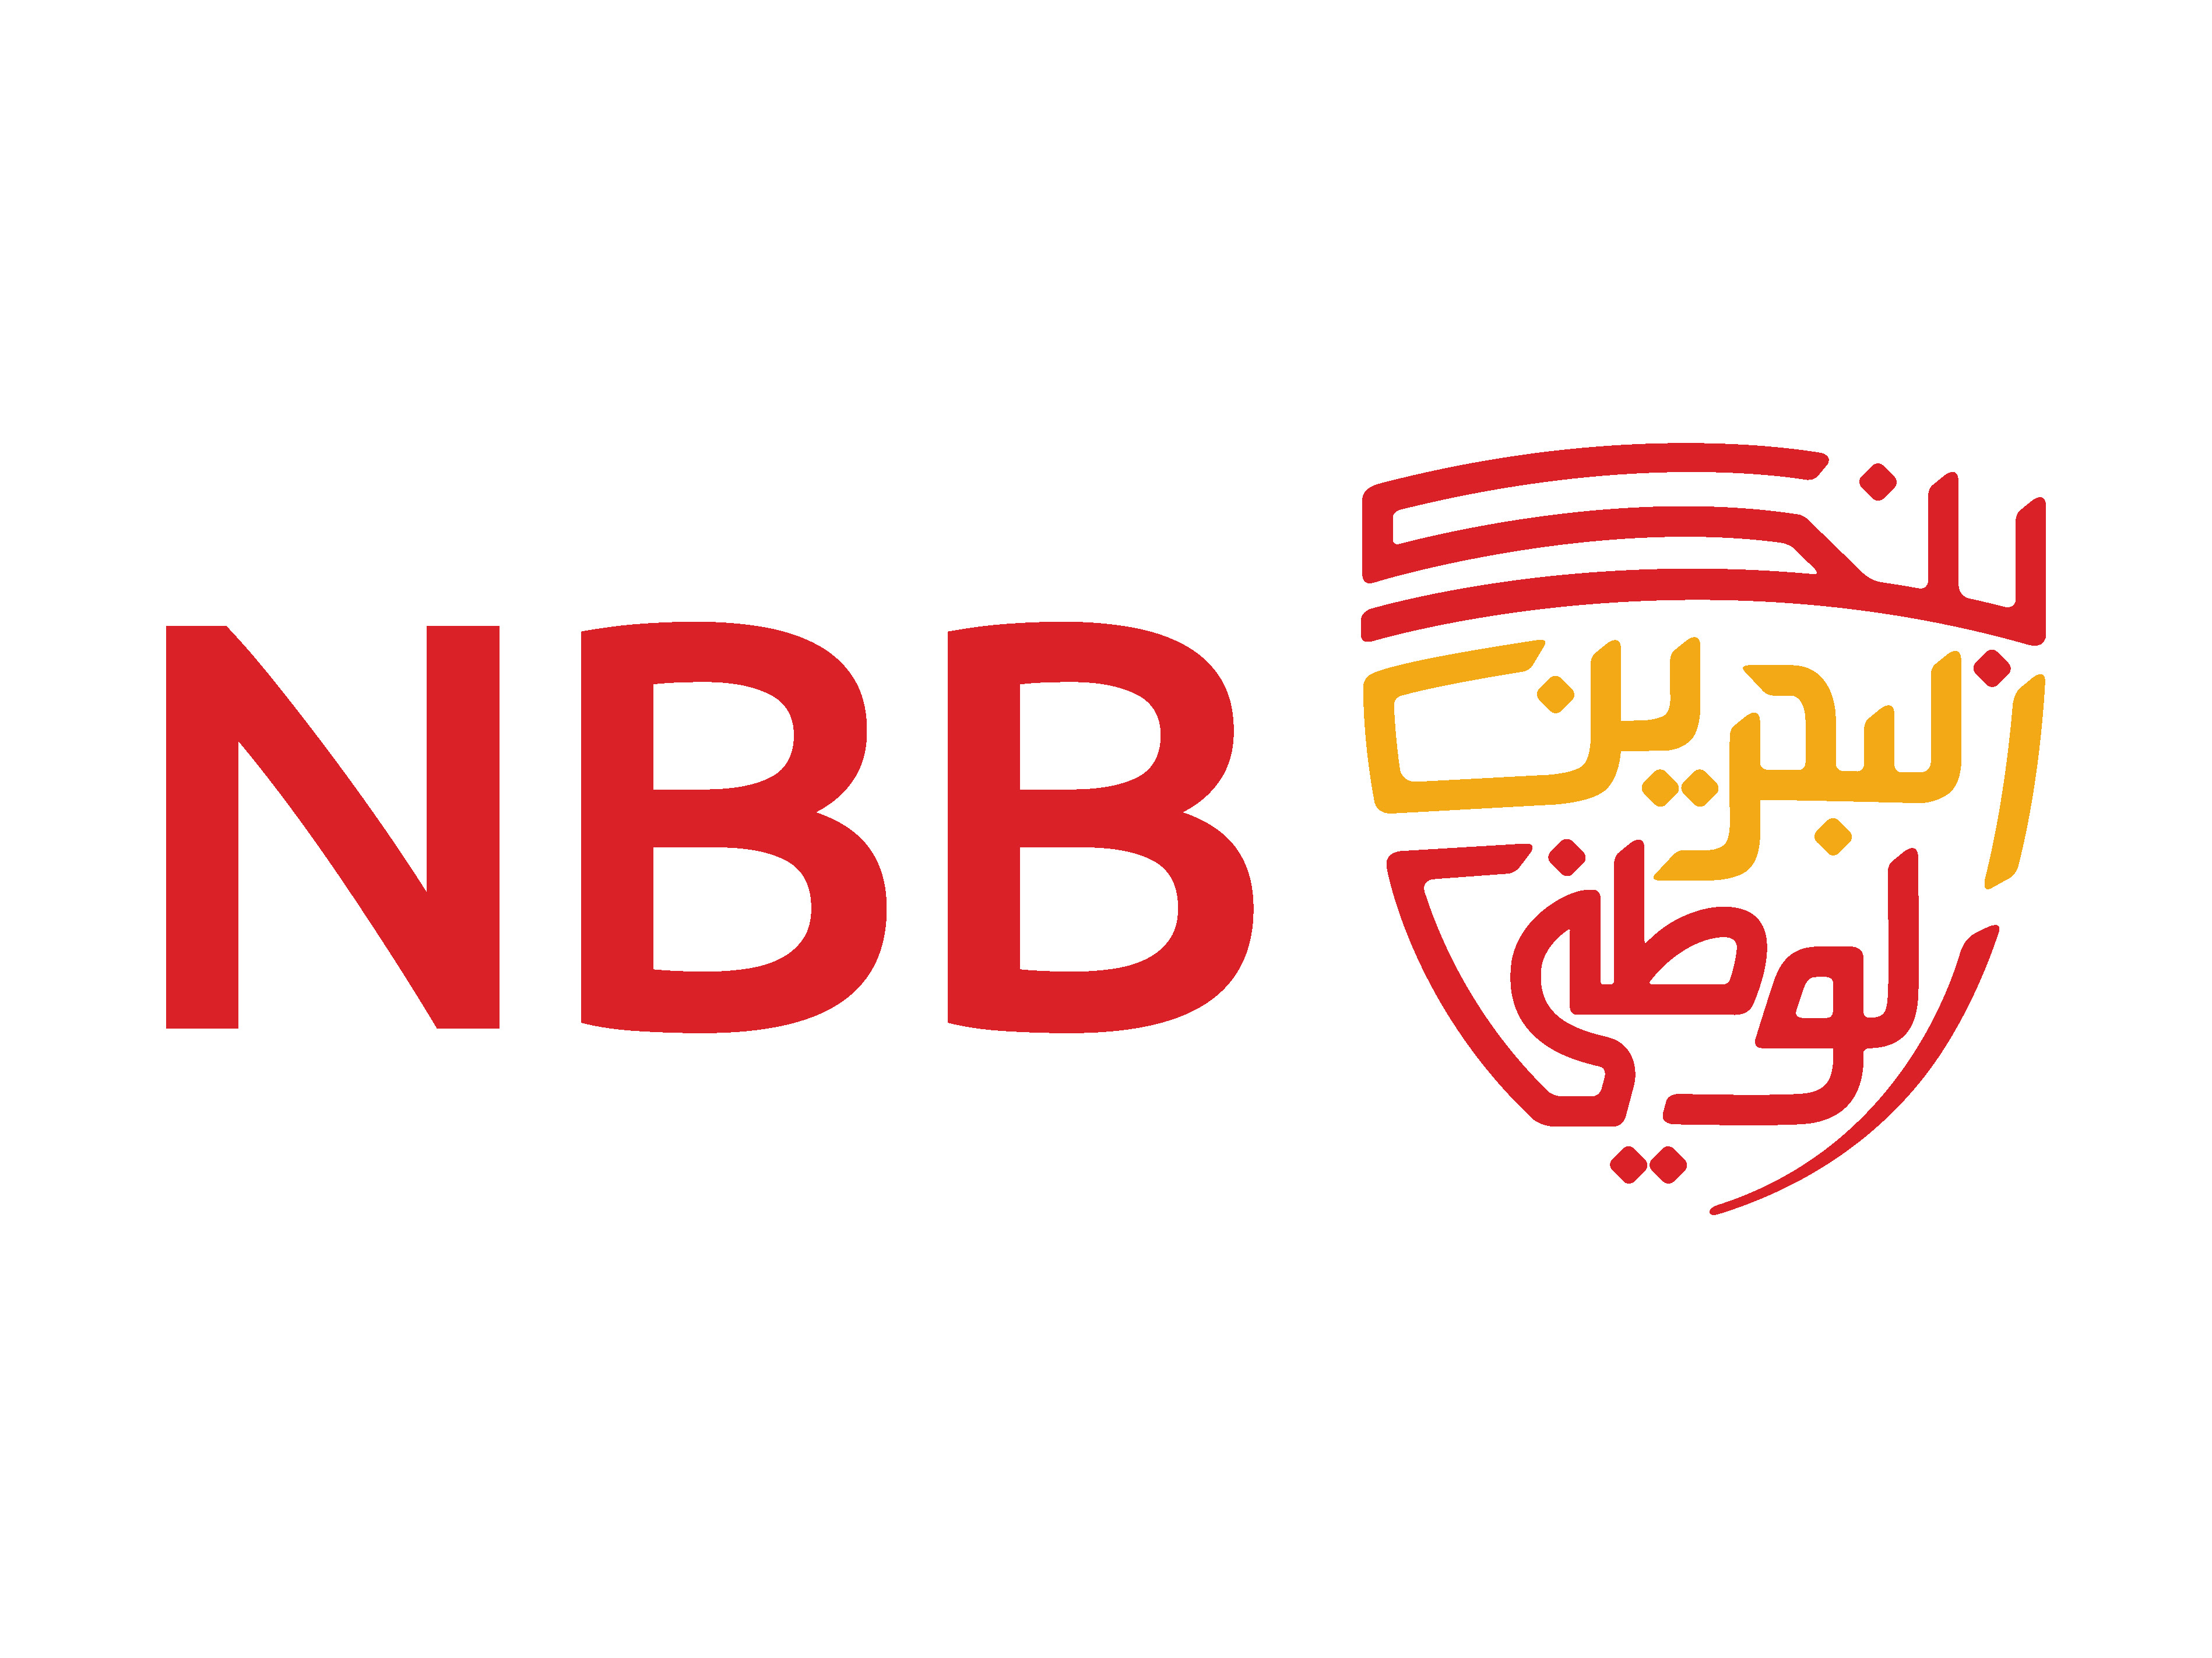 National Bank of Bahrain